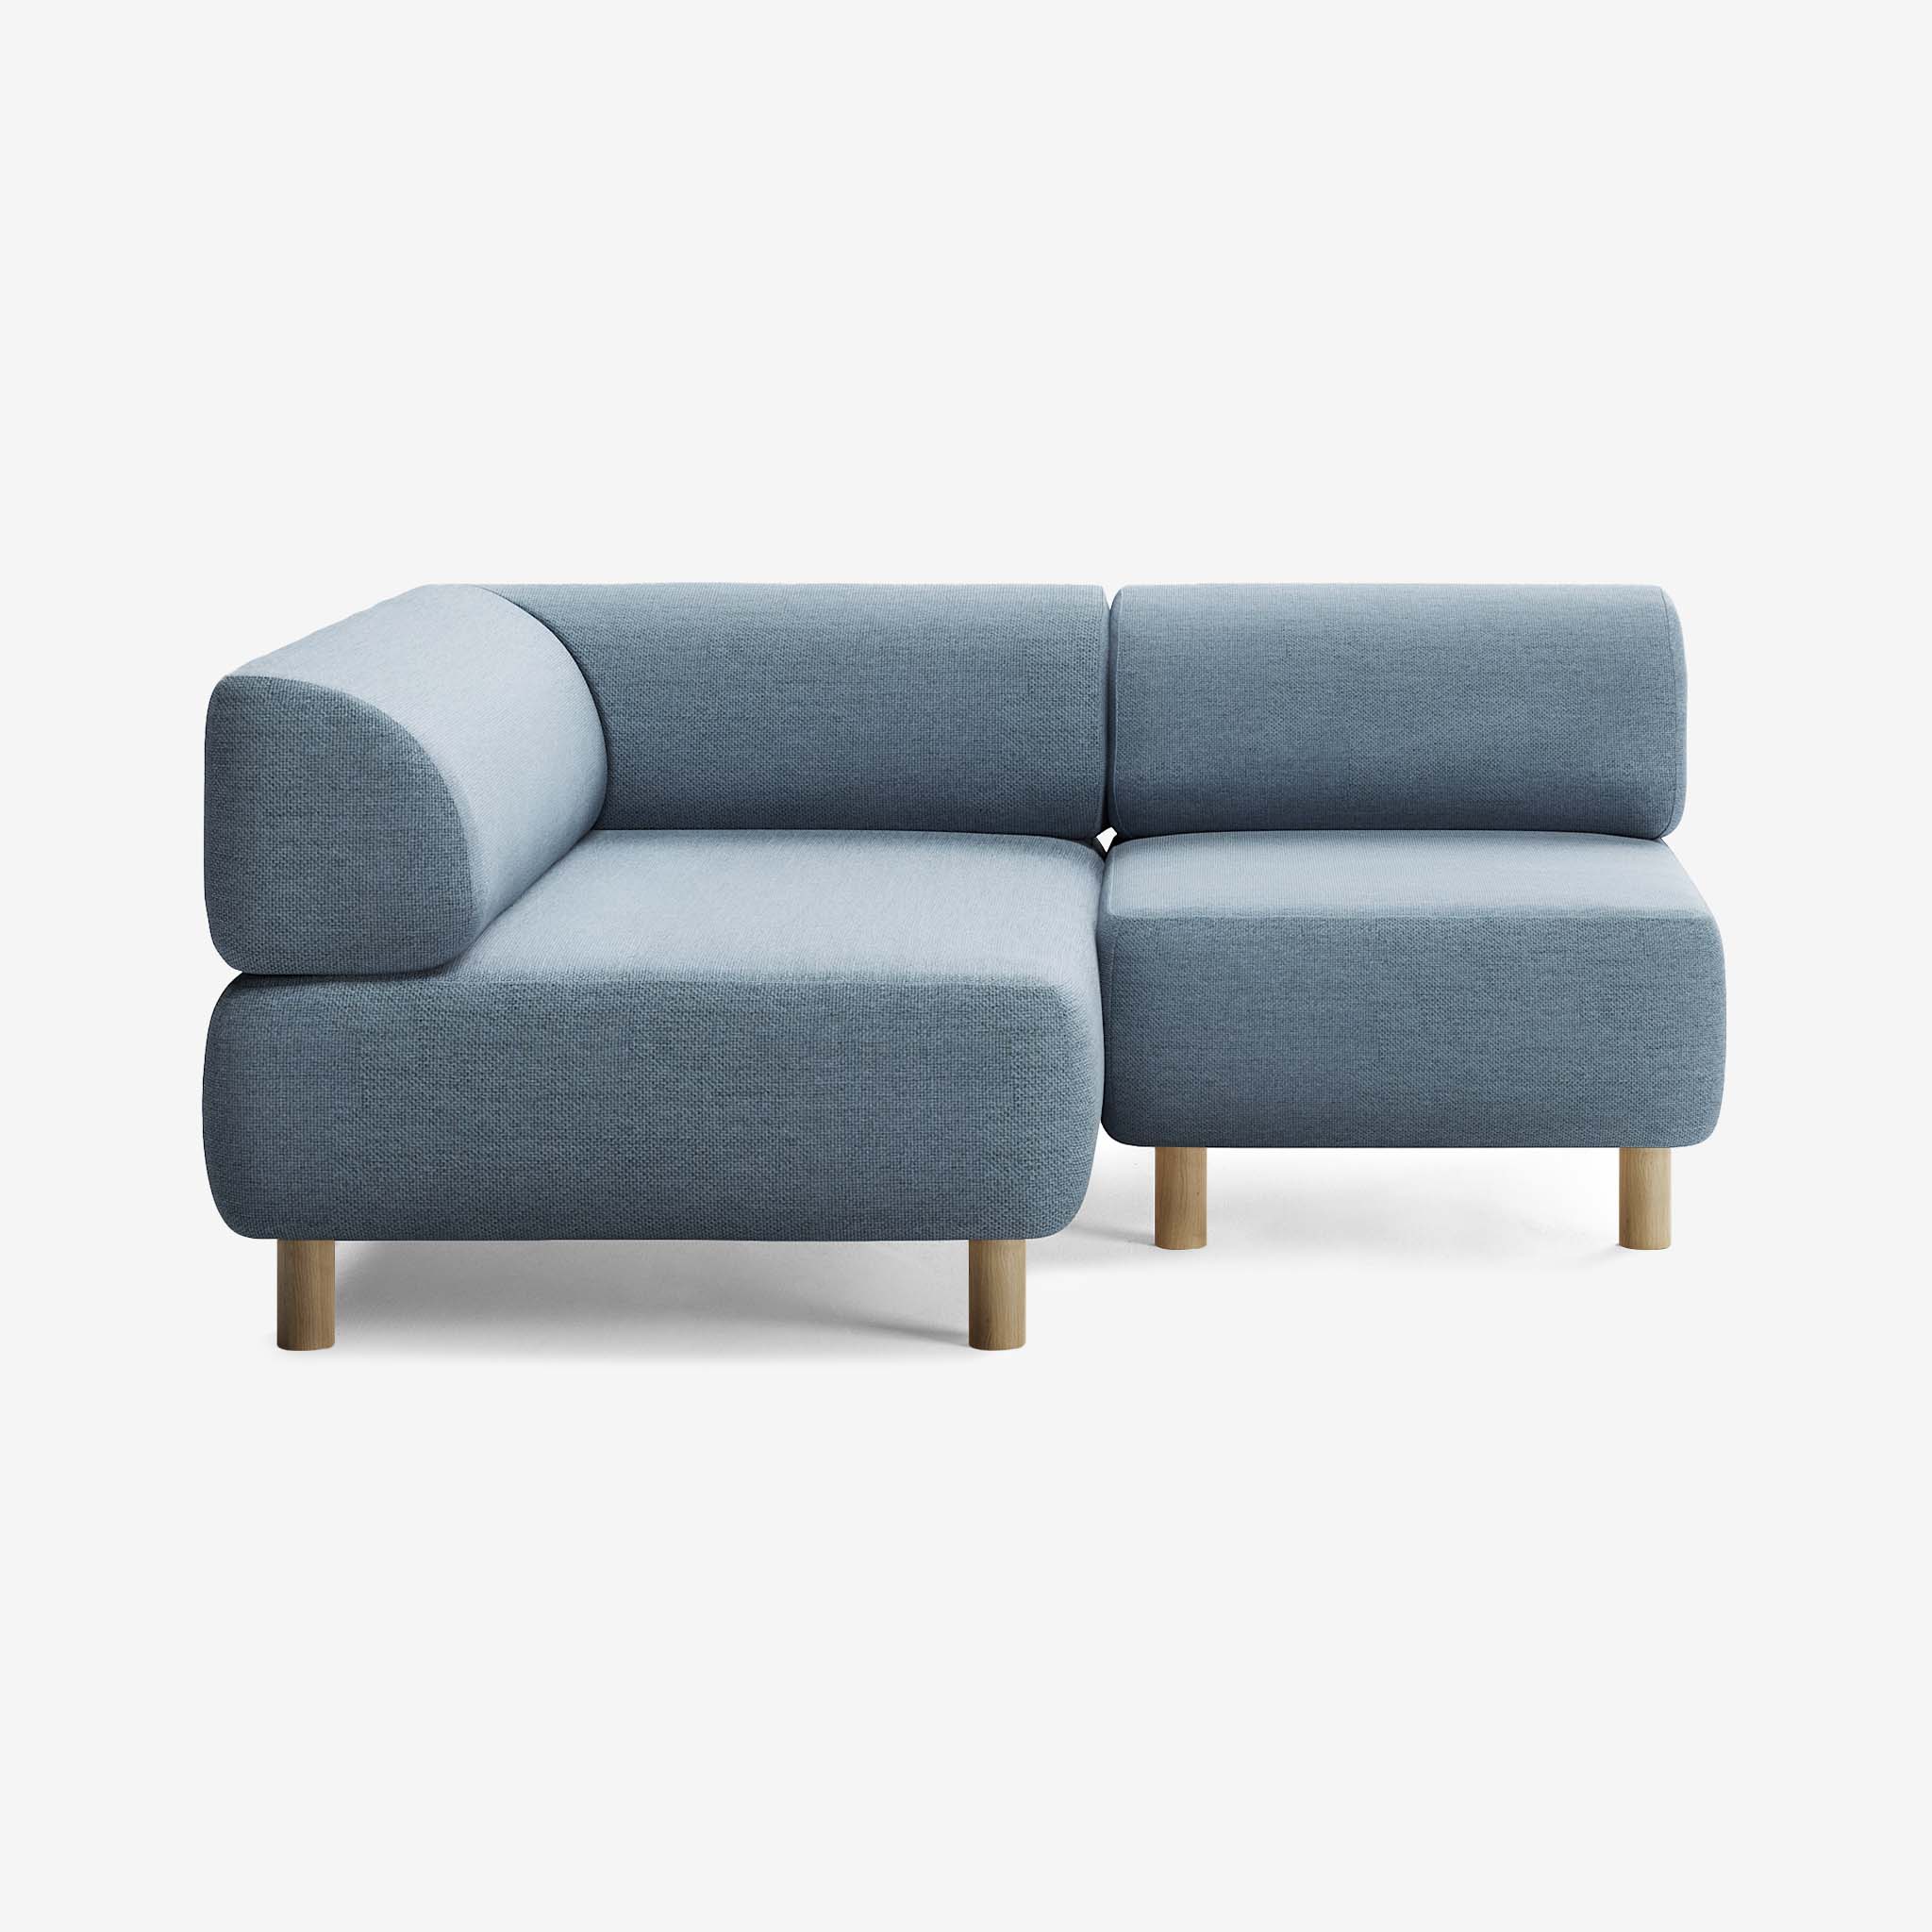 Bolder sofa 170x150 cm 